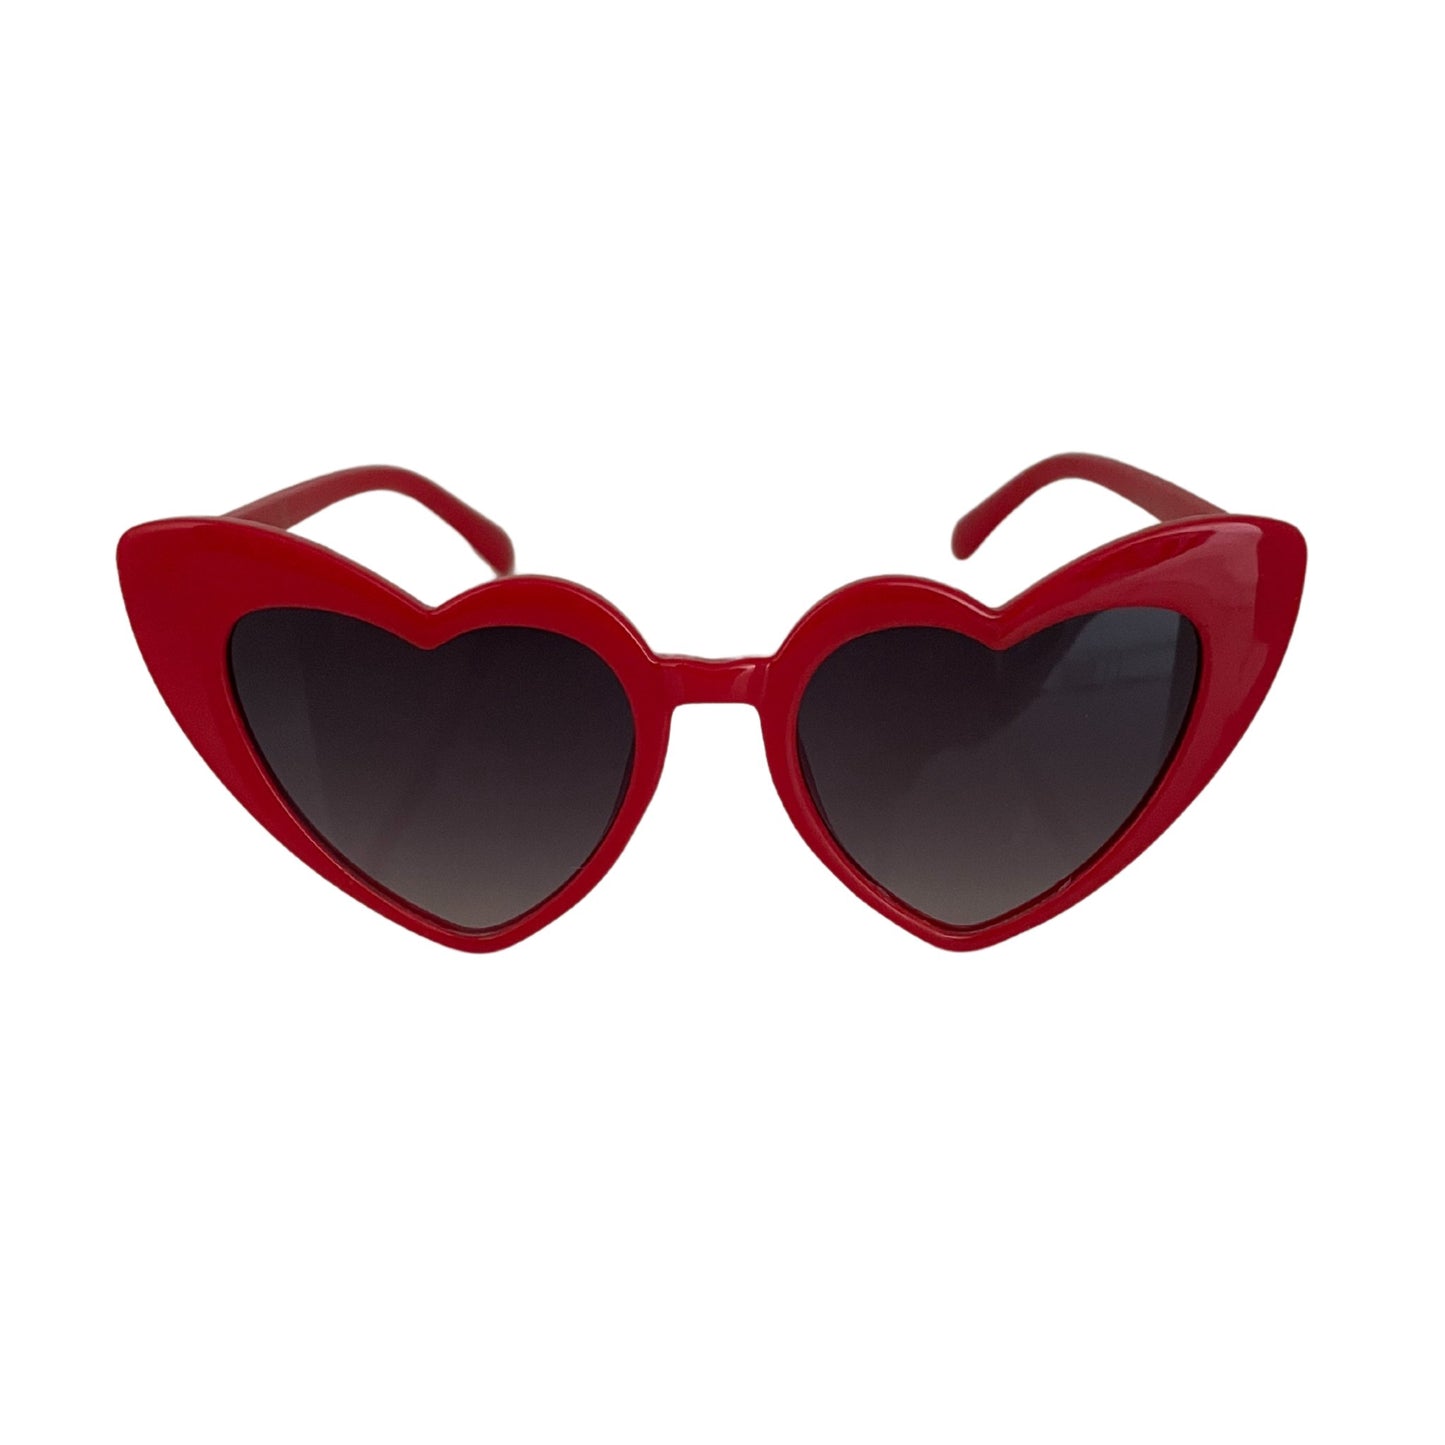 Kids Heart Cateye Sunglasses - Red